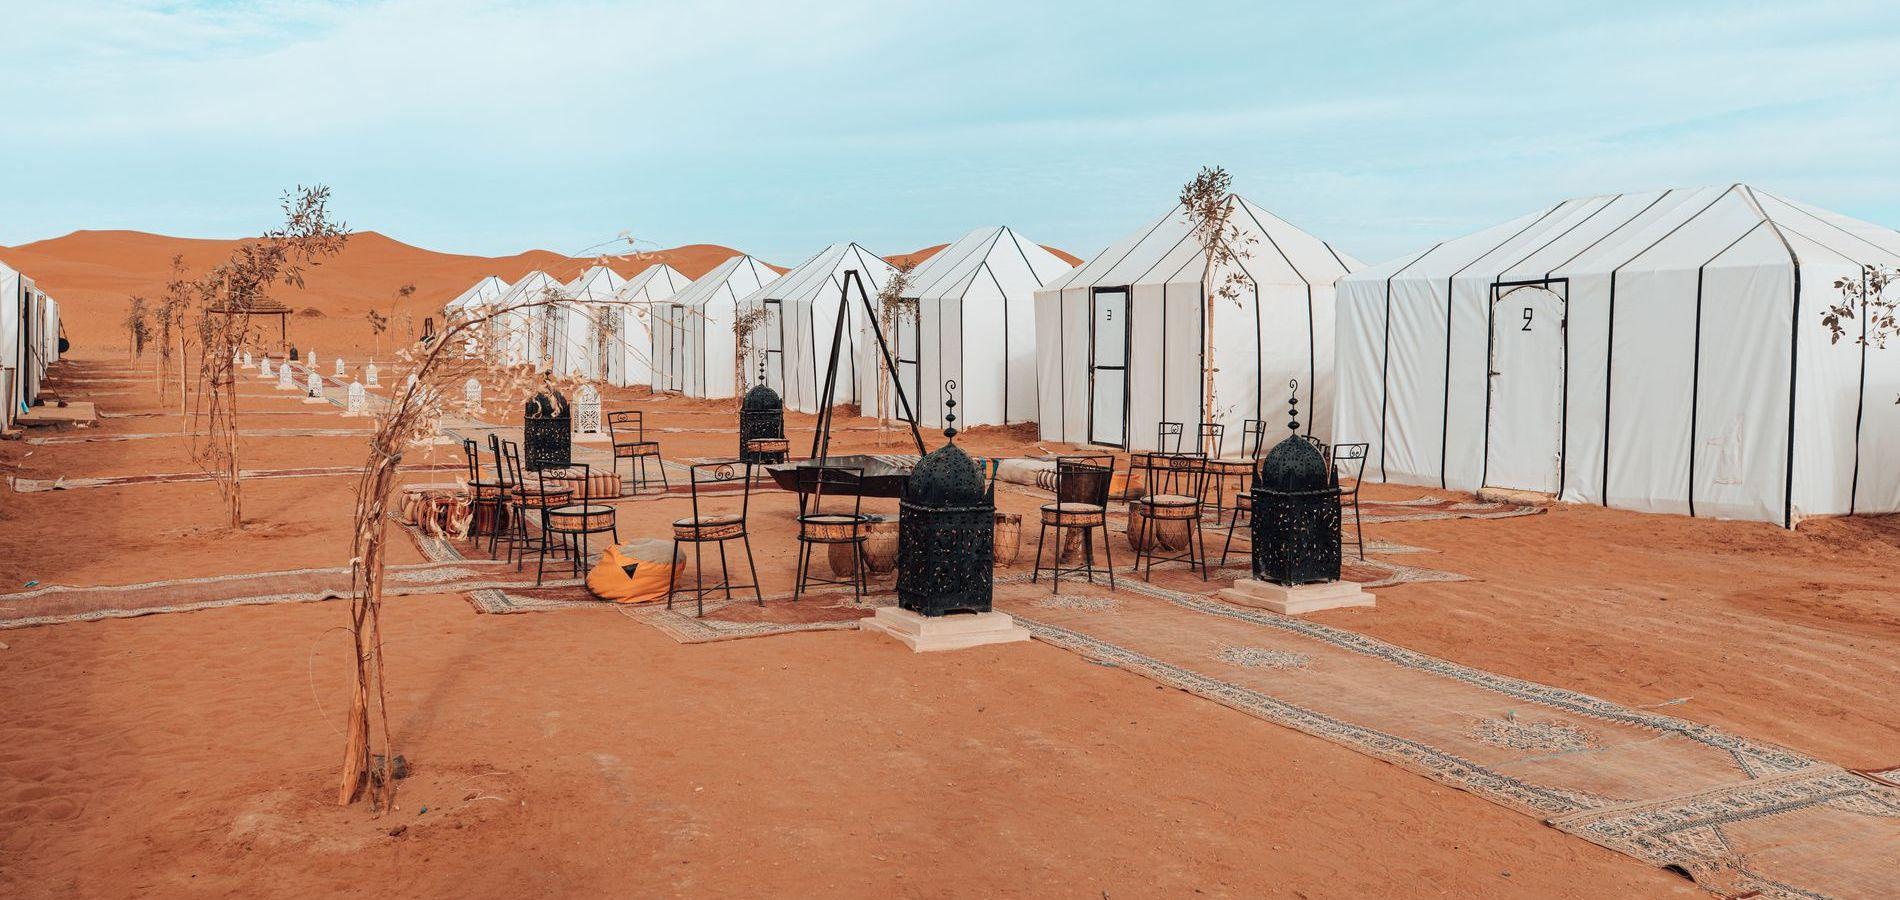 Overnight stay in Luxury desert camp